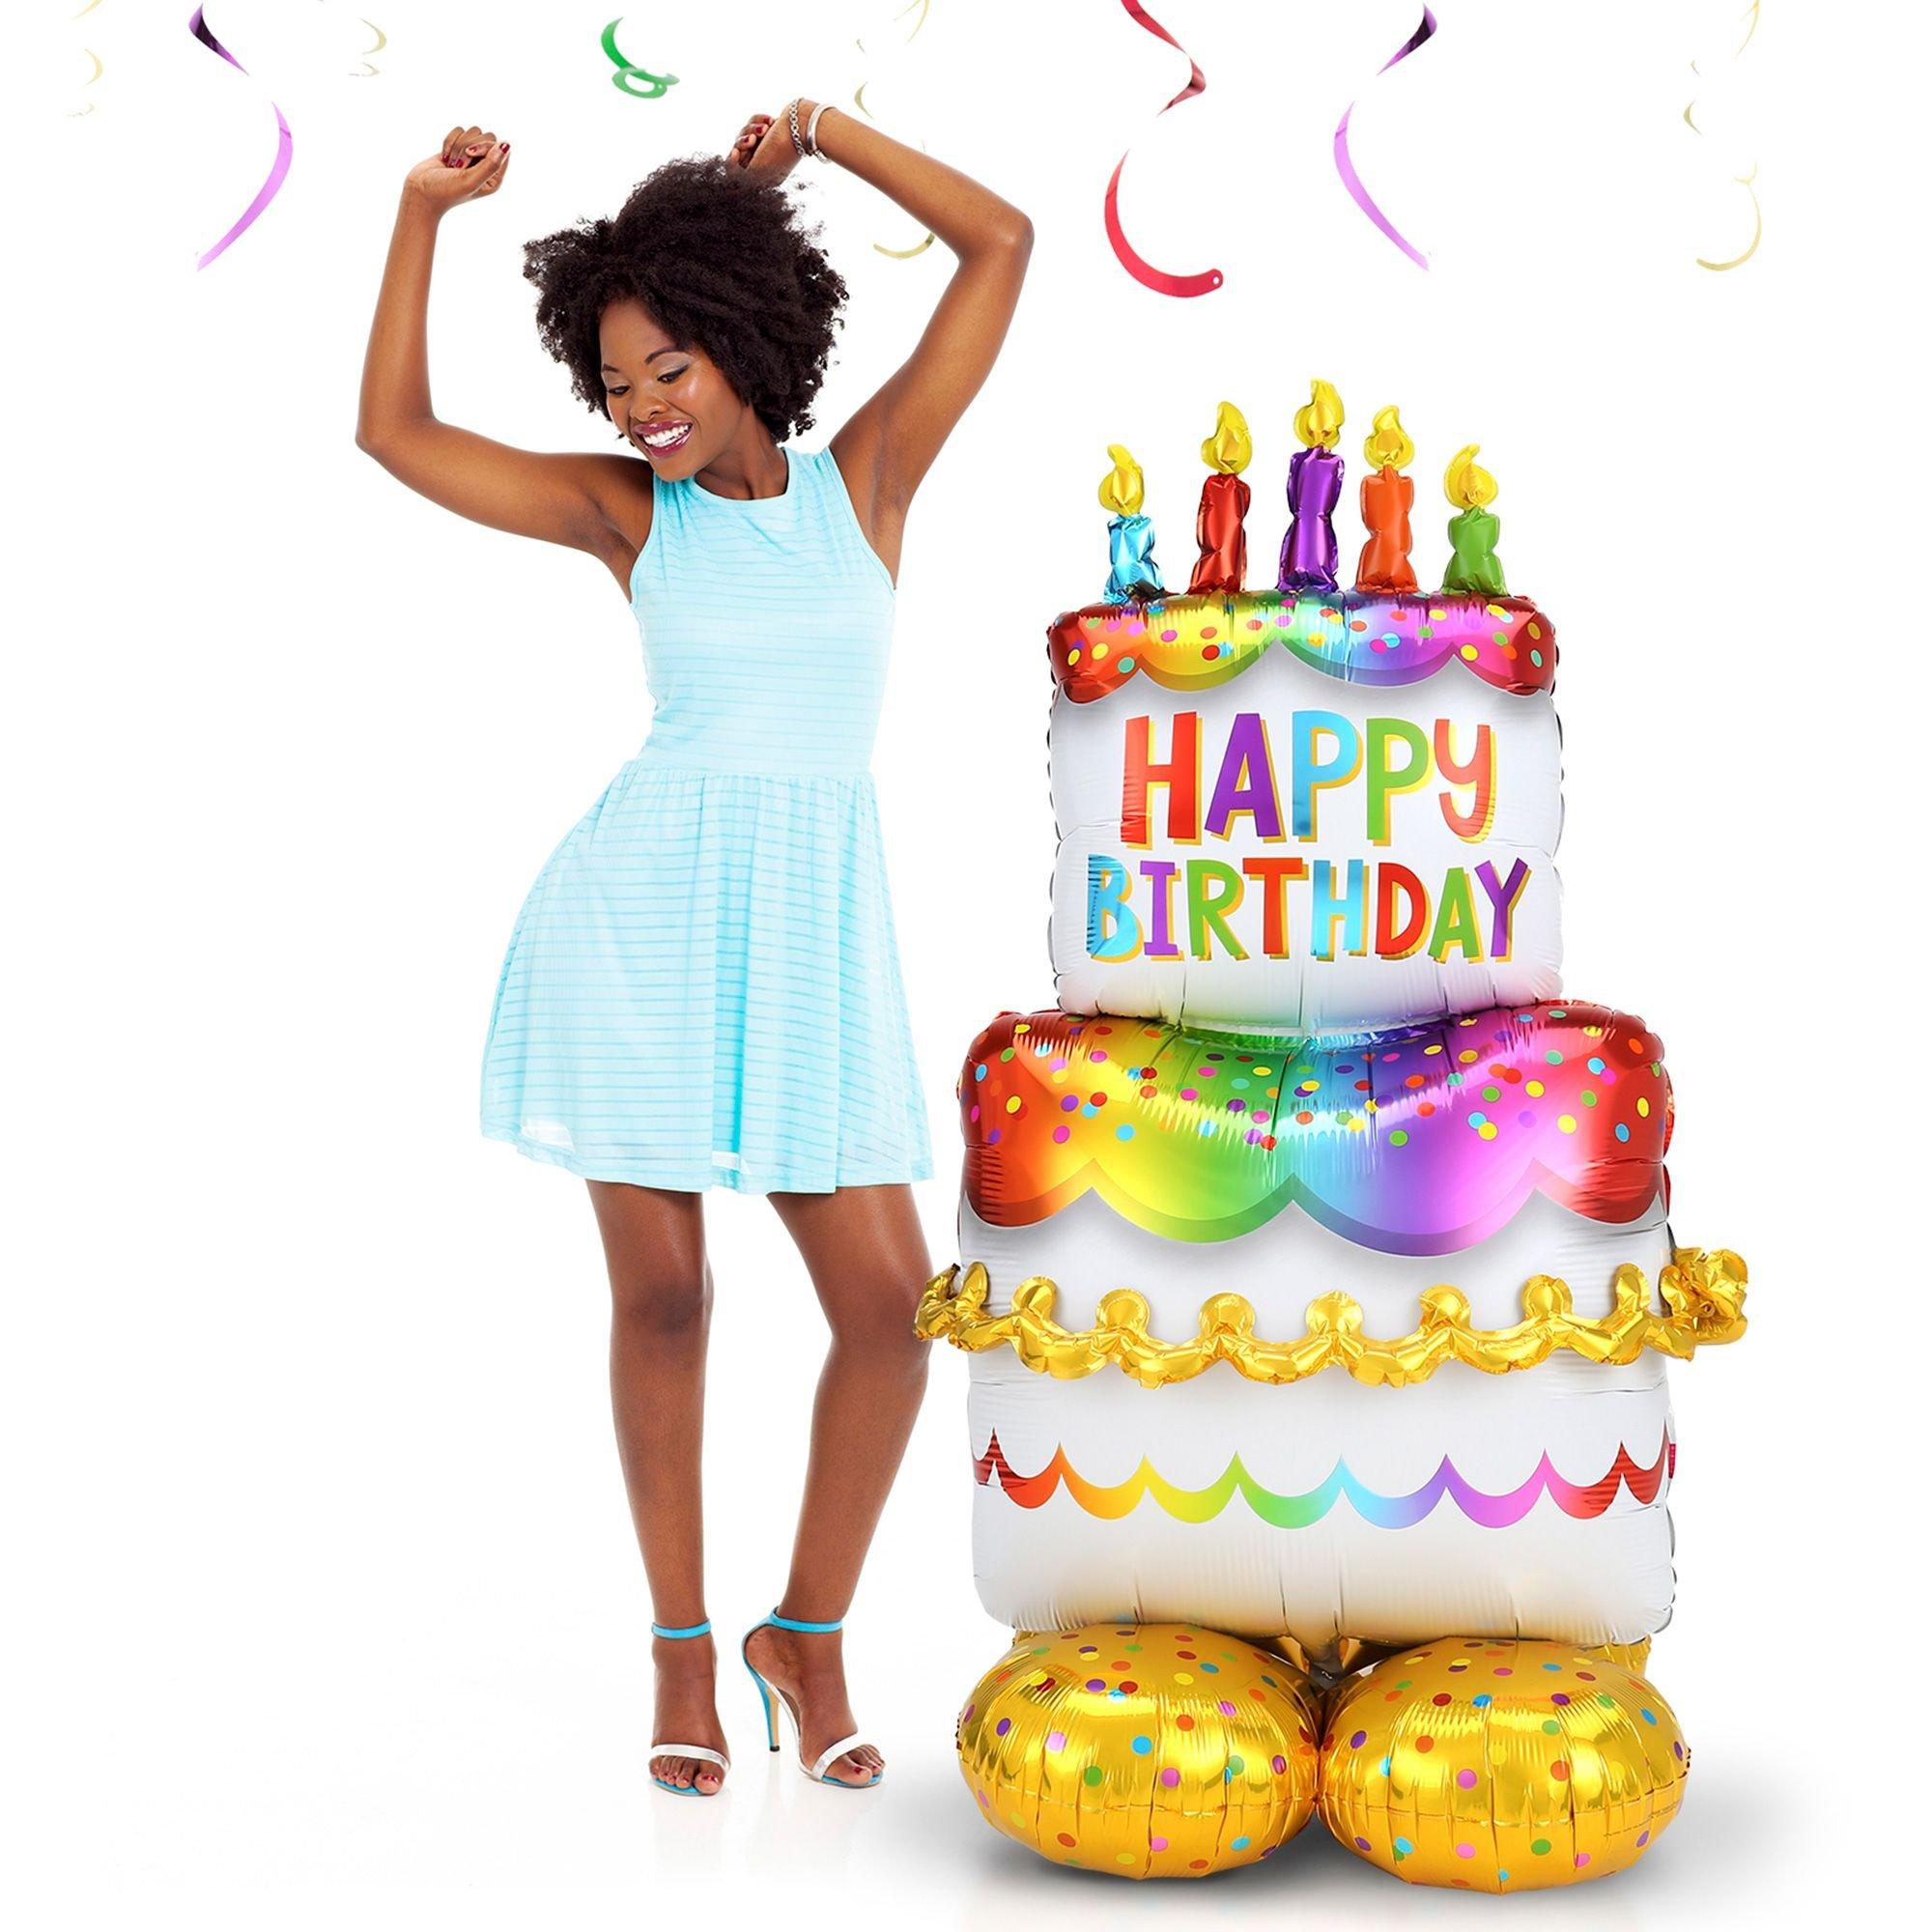 happy birthday cake and balloons